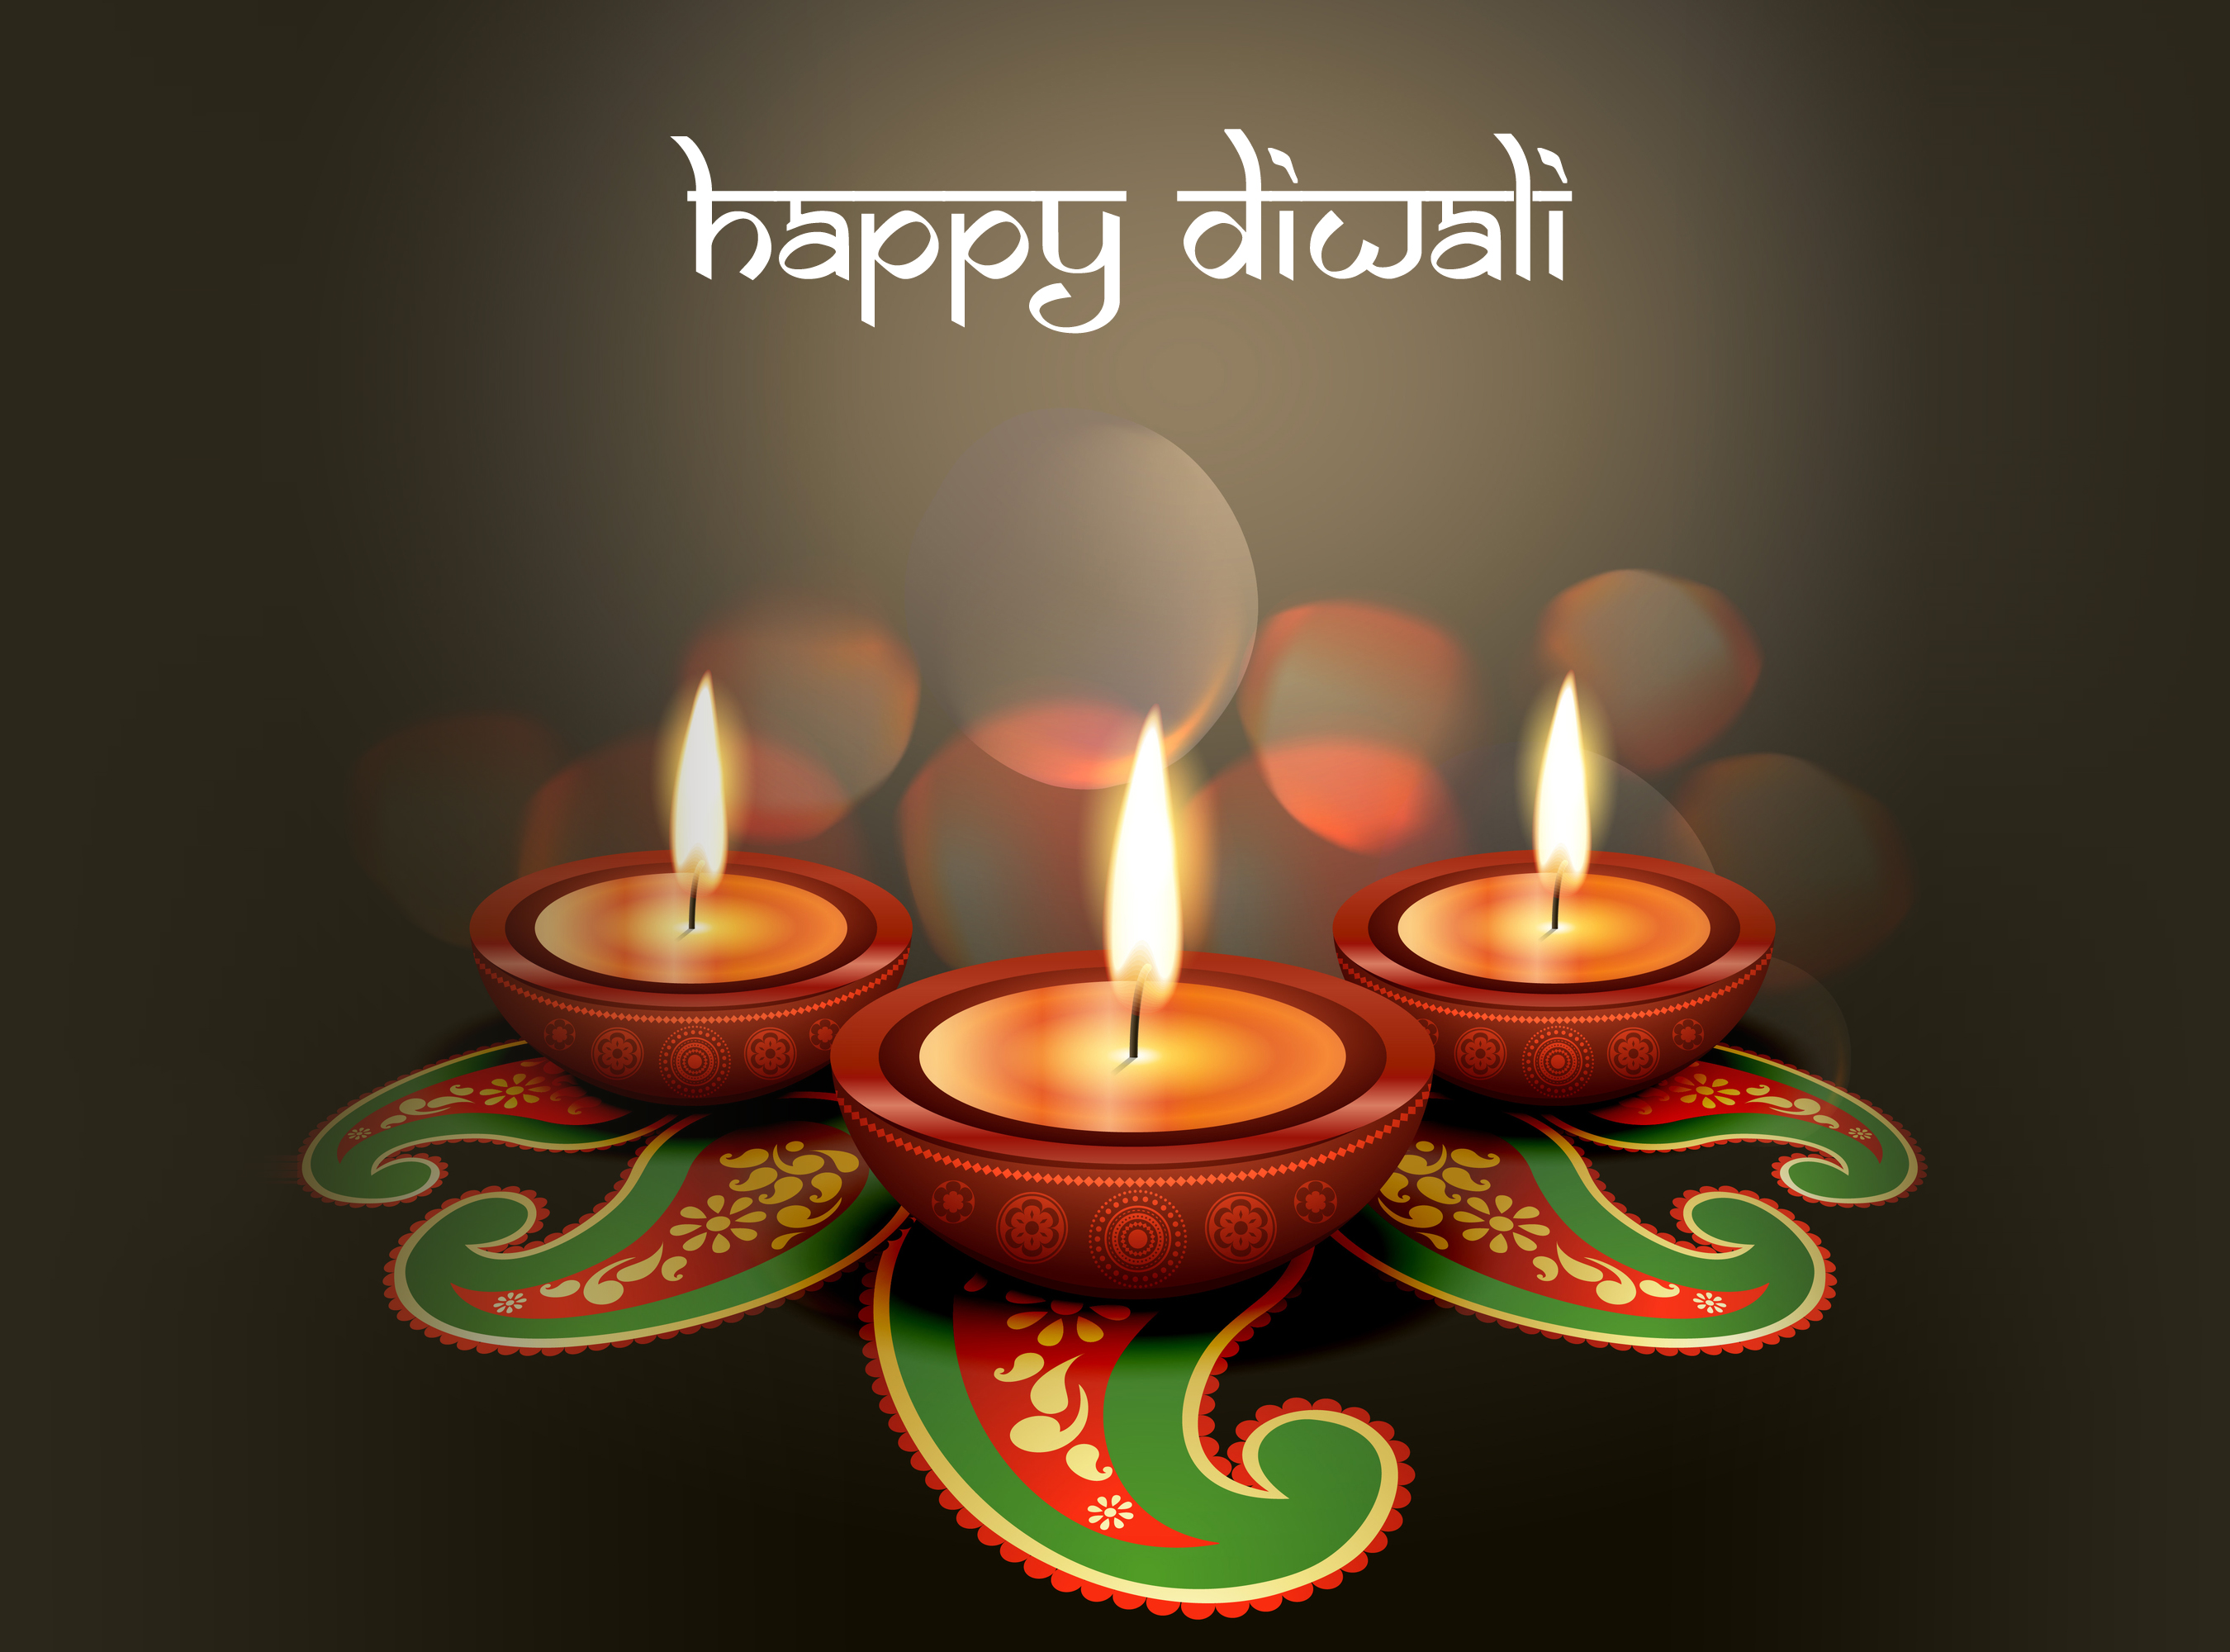 Happy diwali pics